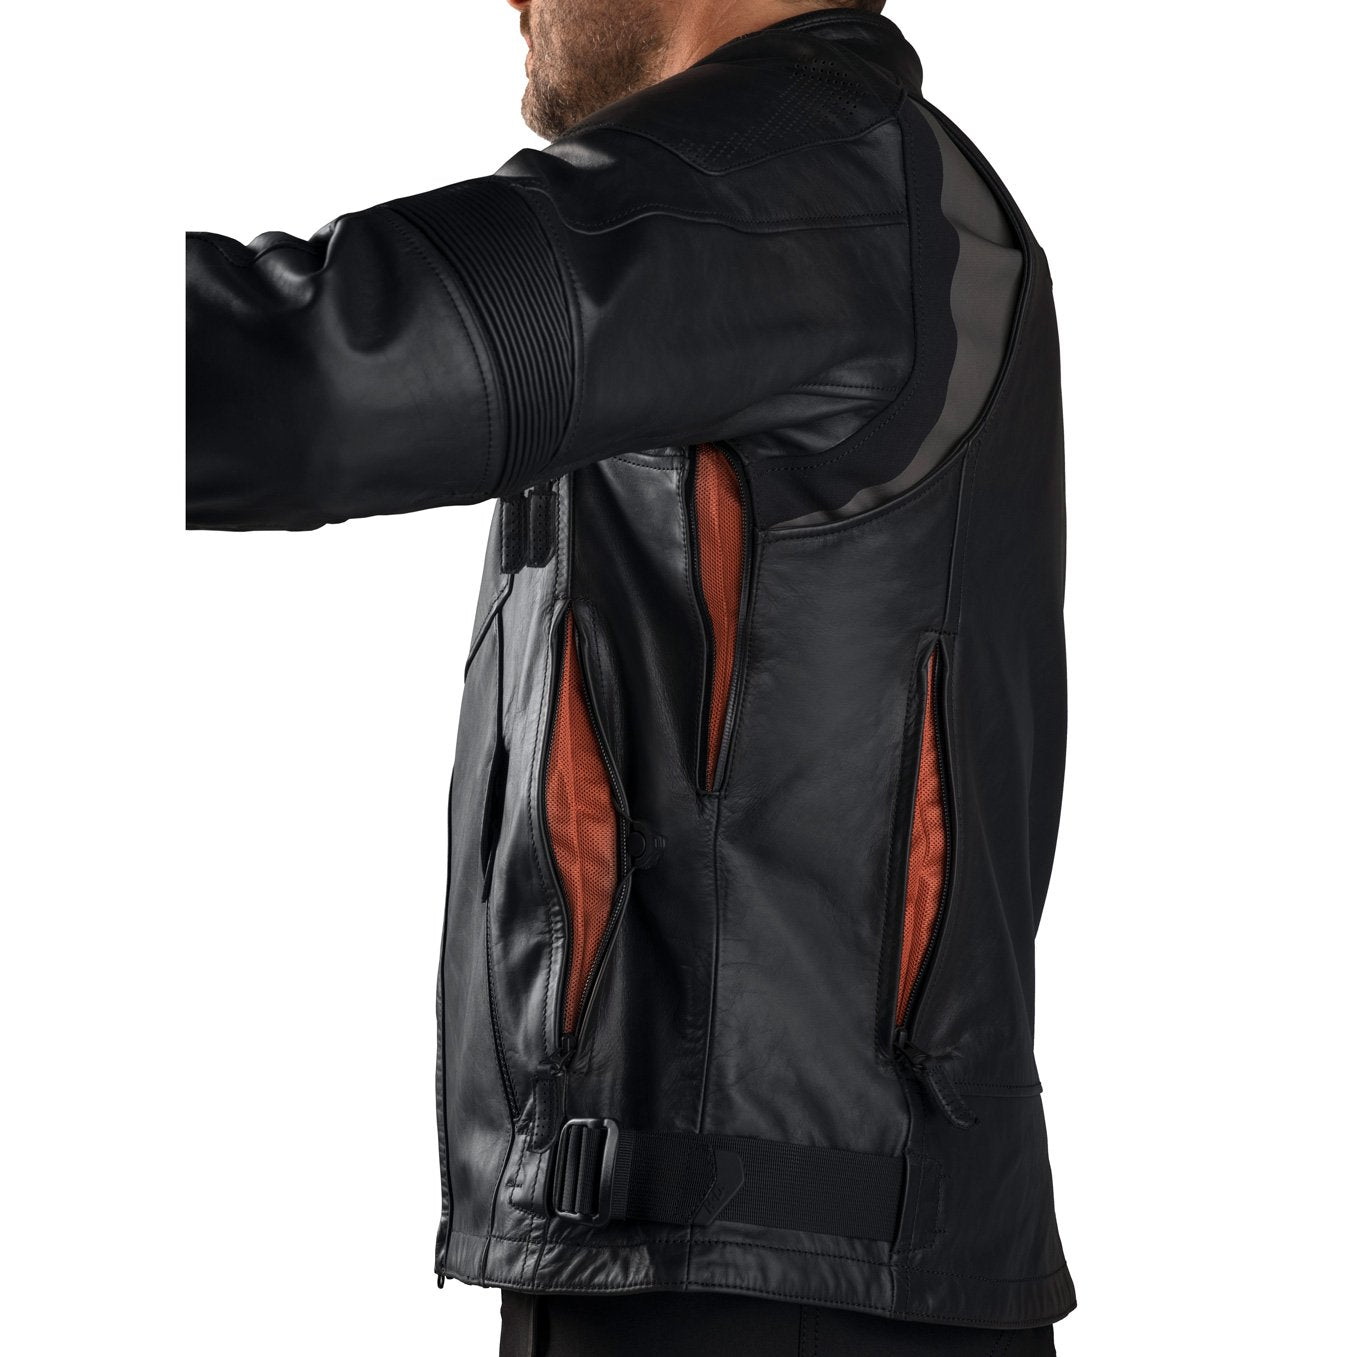 Men's FXRG Perforated Leather Jacket - 98057-19VM – Darling Downs  Harley-Davidson